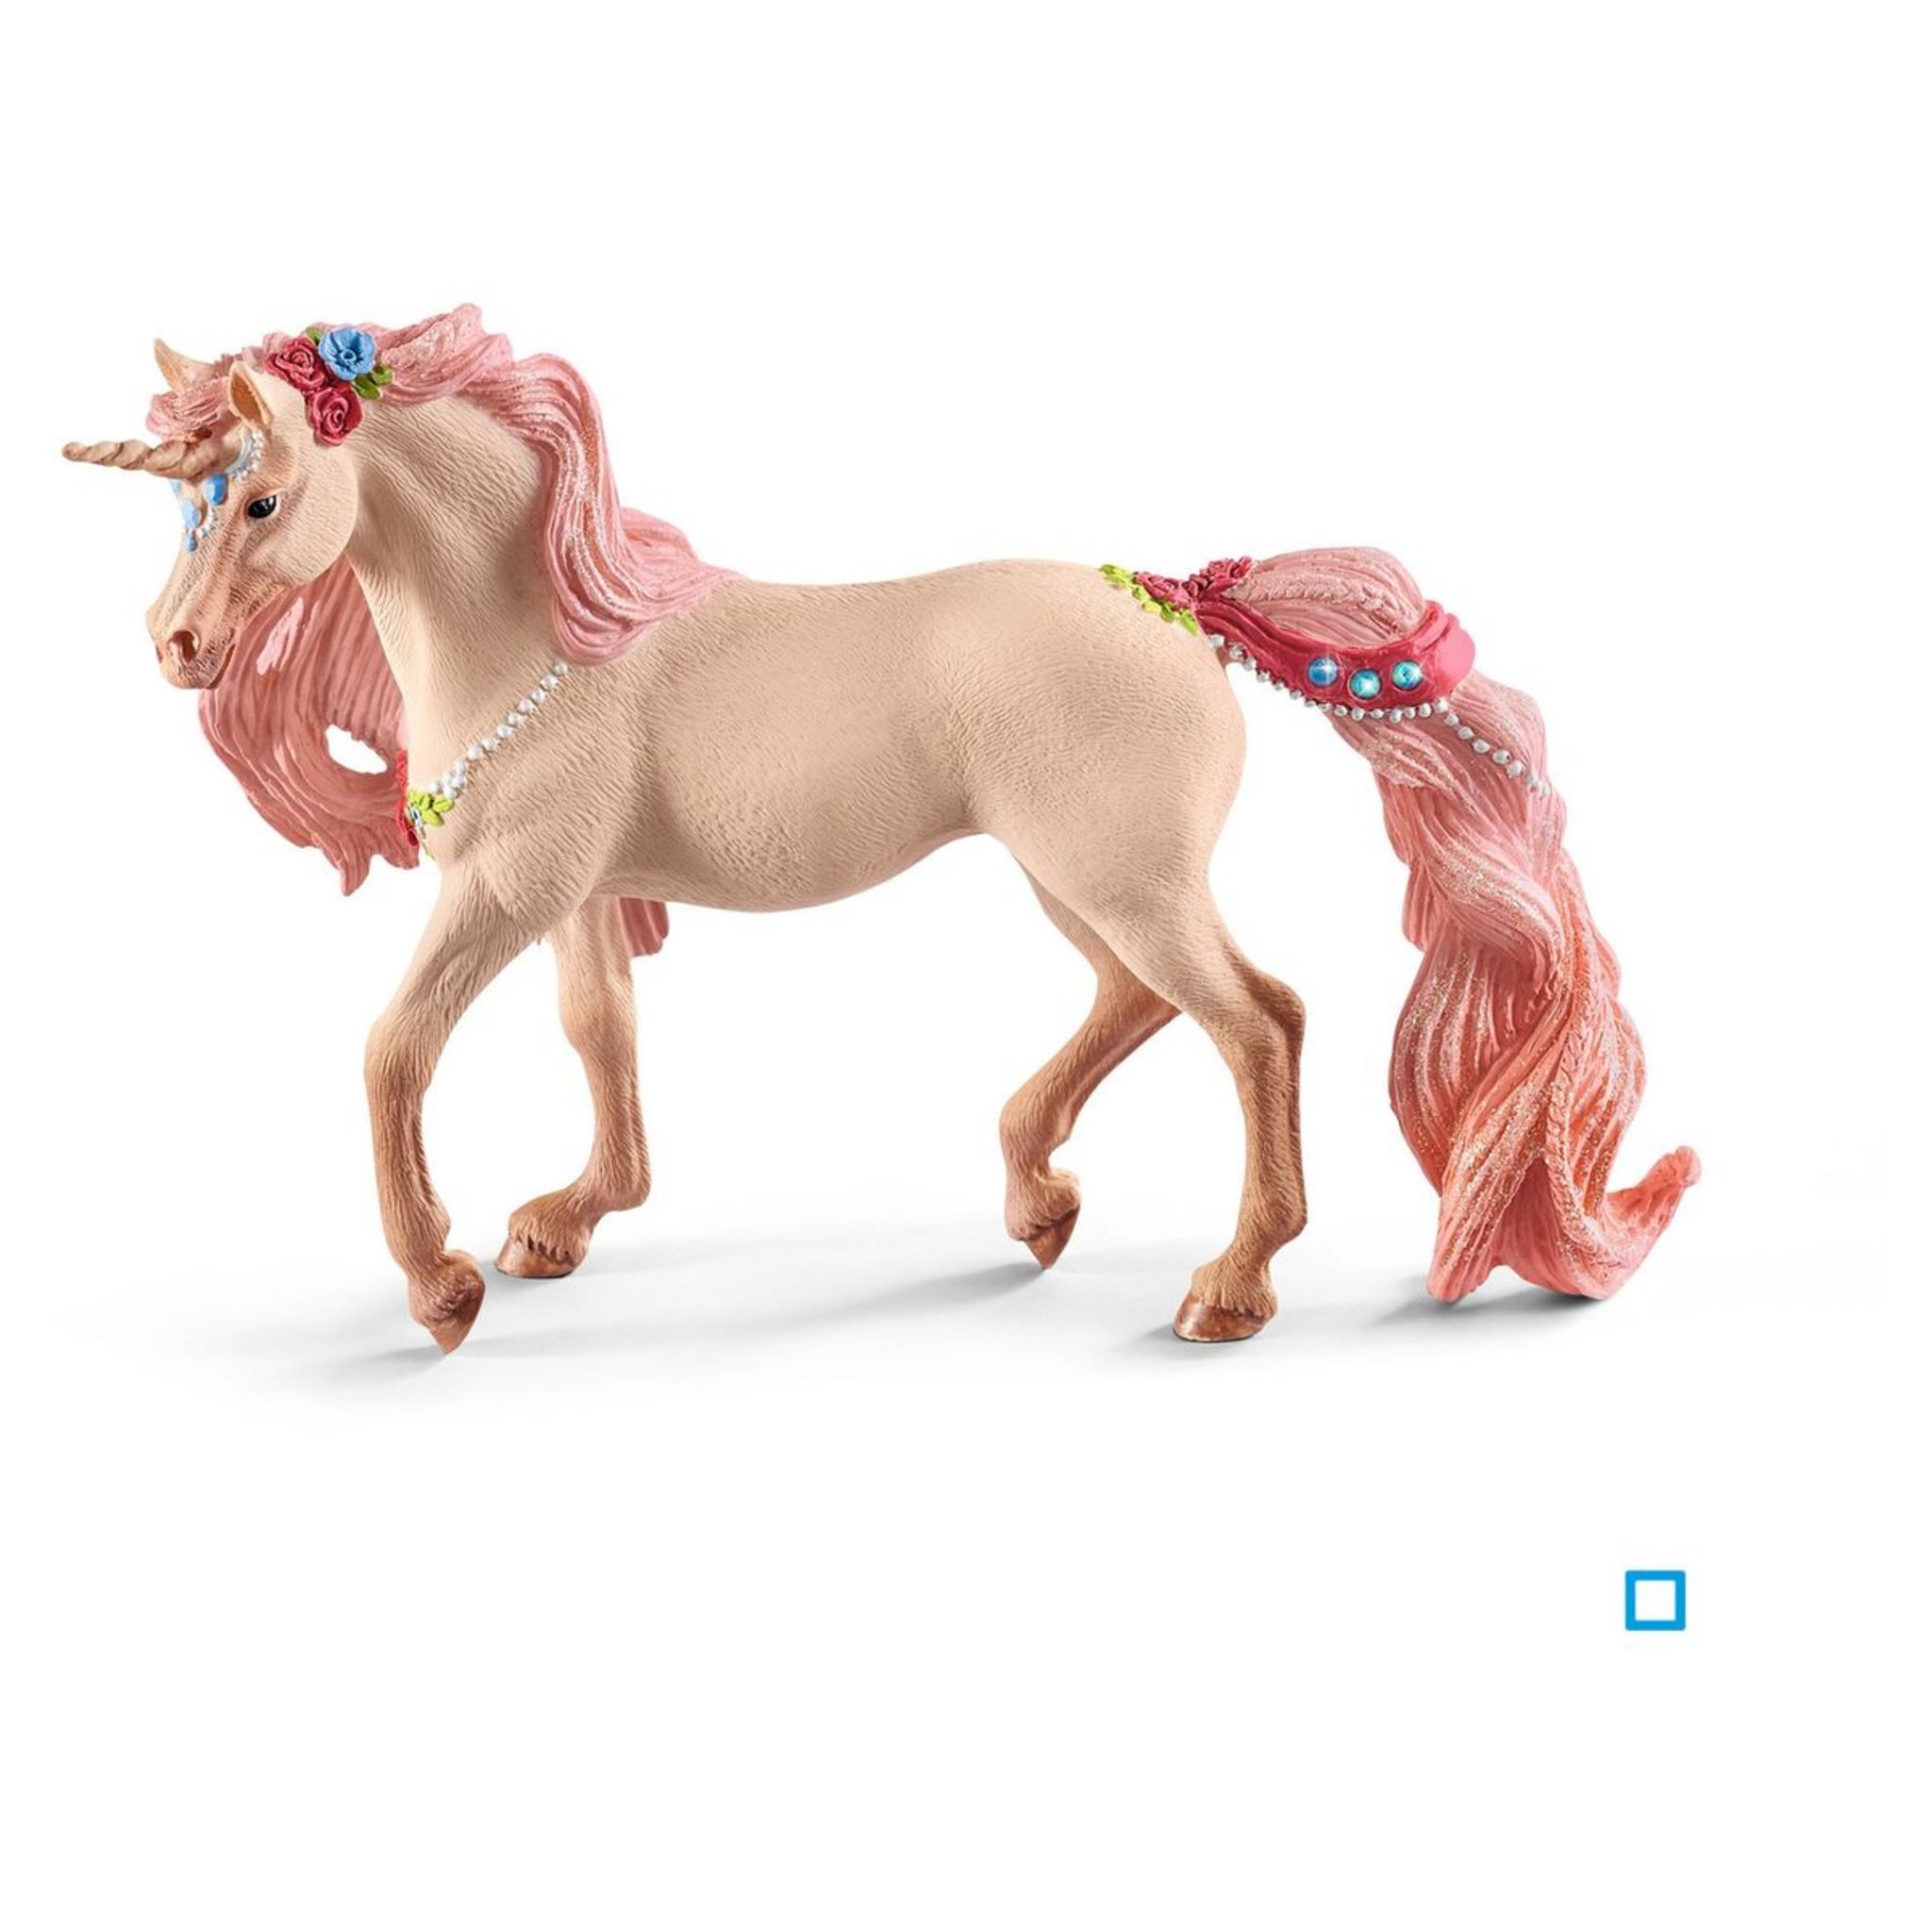 Grossiste jouet licorne pas cher, Figurine action Licorne ailée rose